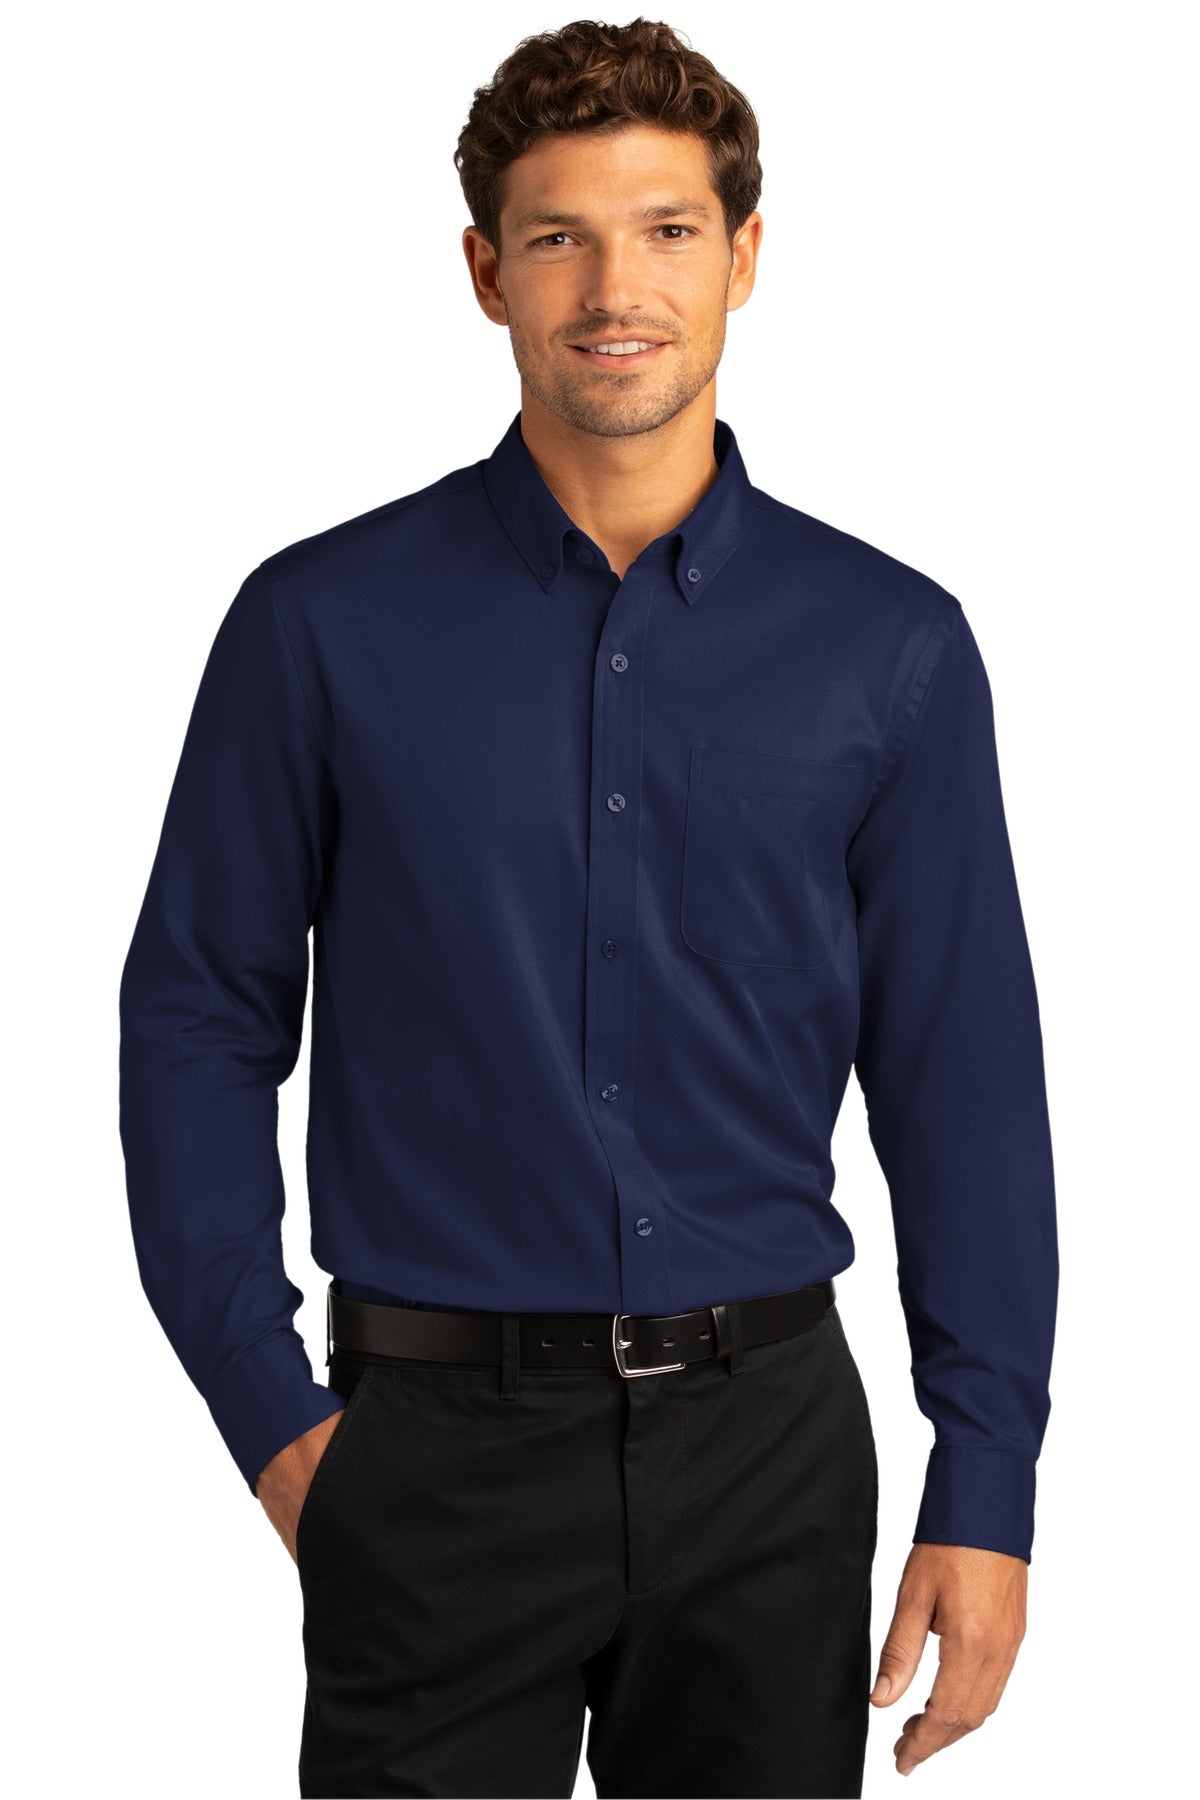 Port Authority® Long Sleeve SuperPro React™ Twill Shirt. W808 [True Navy] - DFW Impression